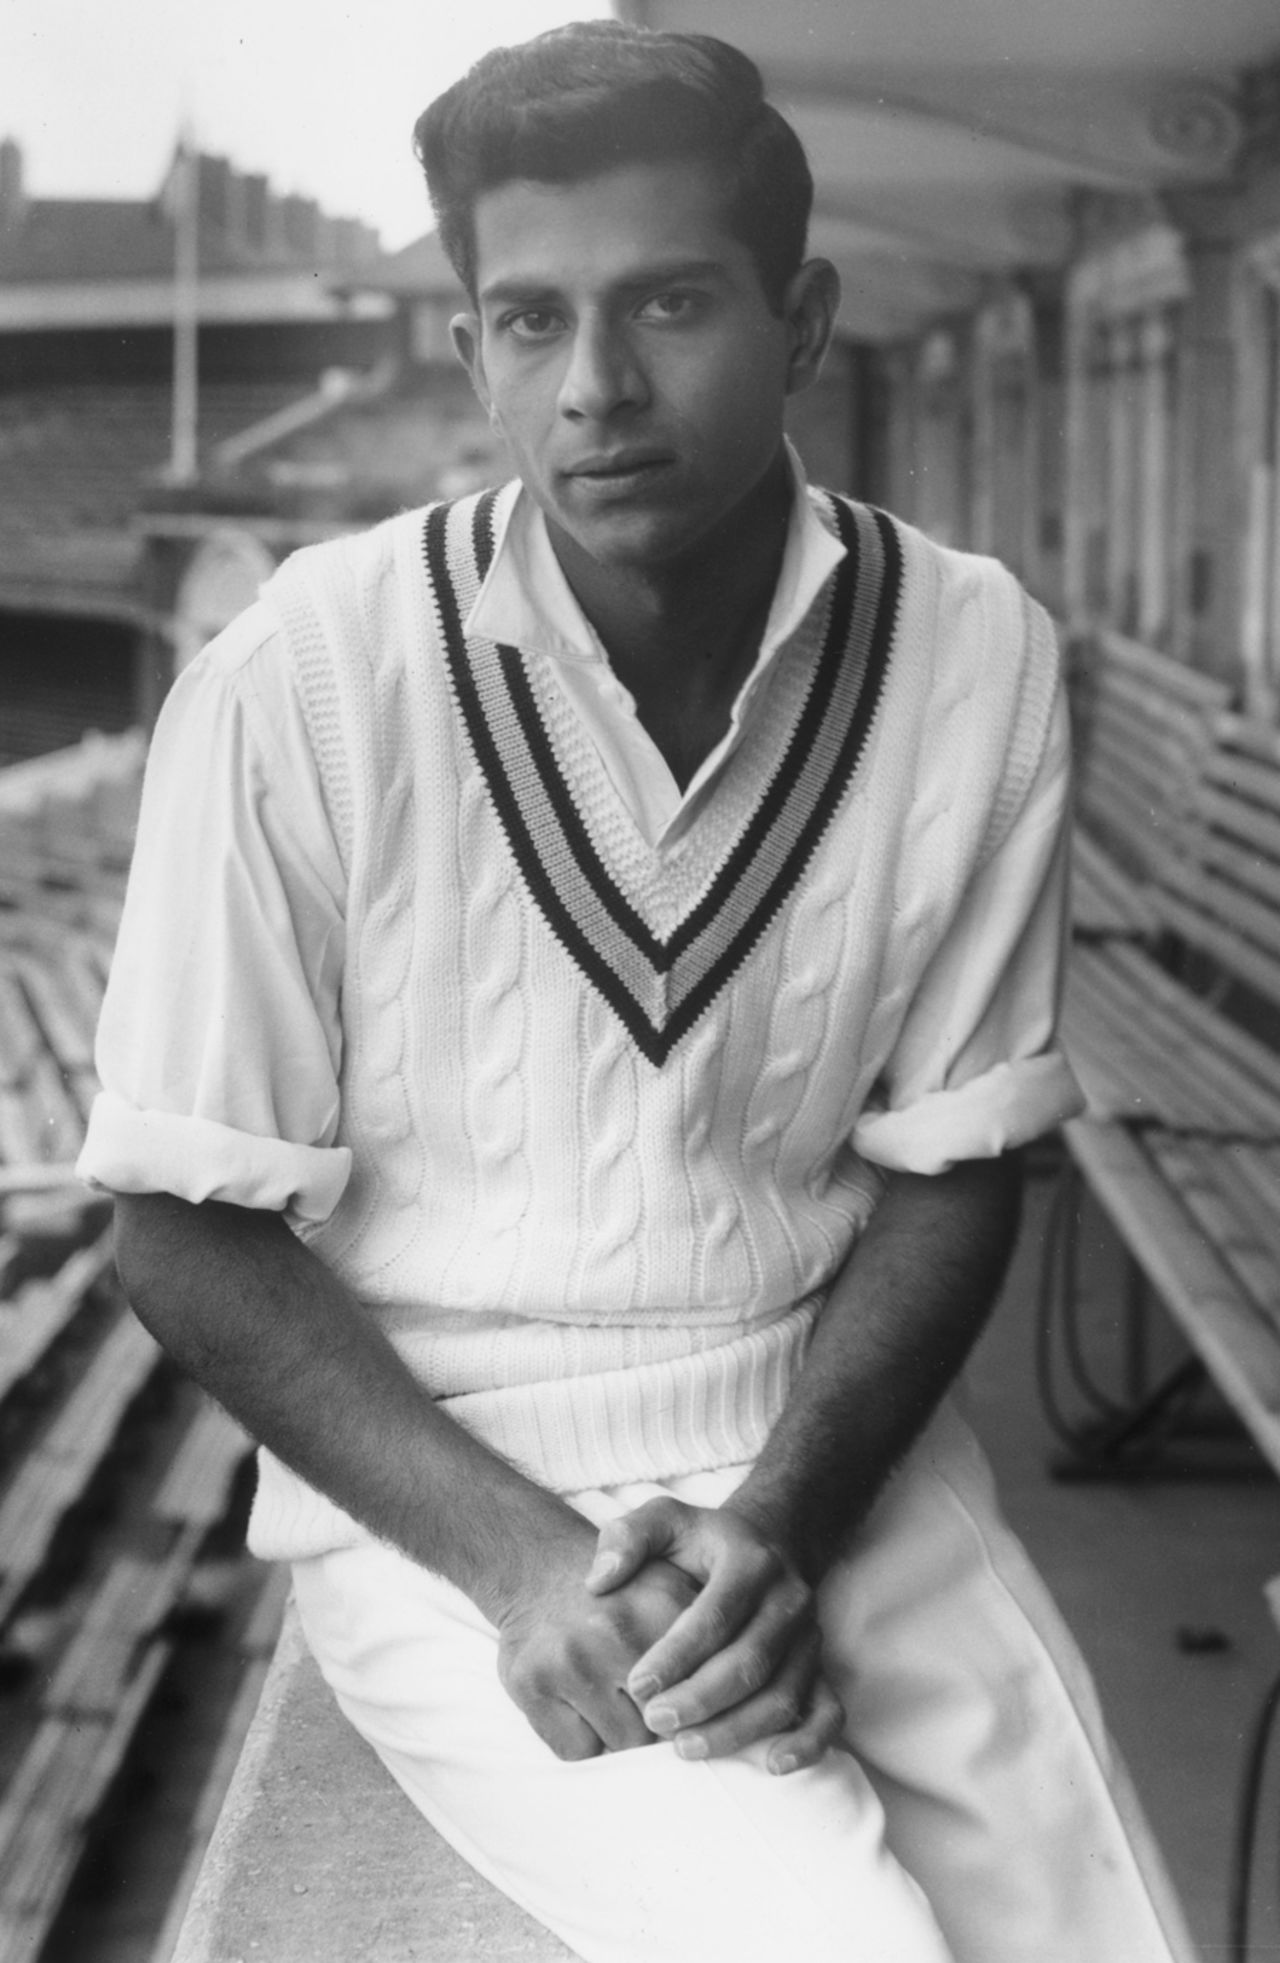 ML Jaisimha made his Test debut at Lord's, May 1, 1959